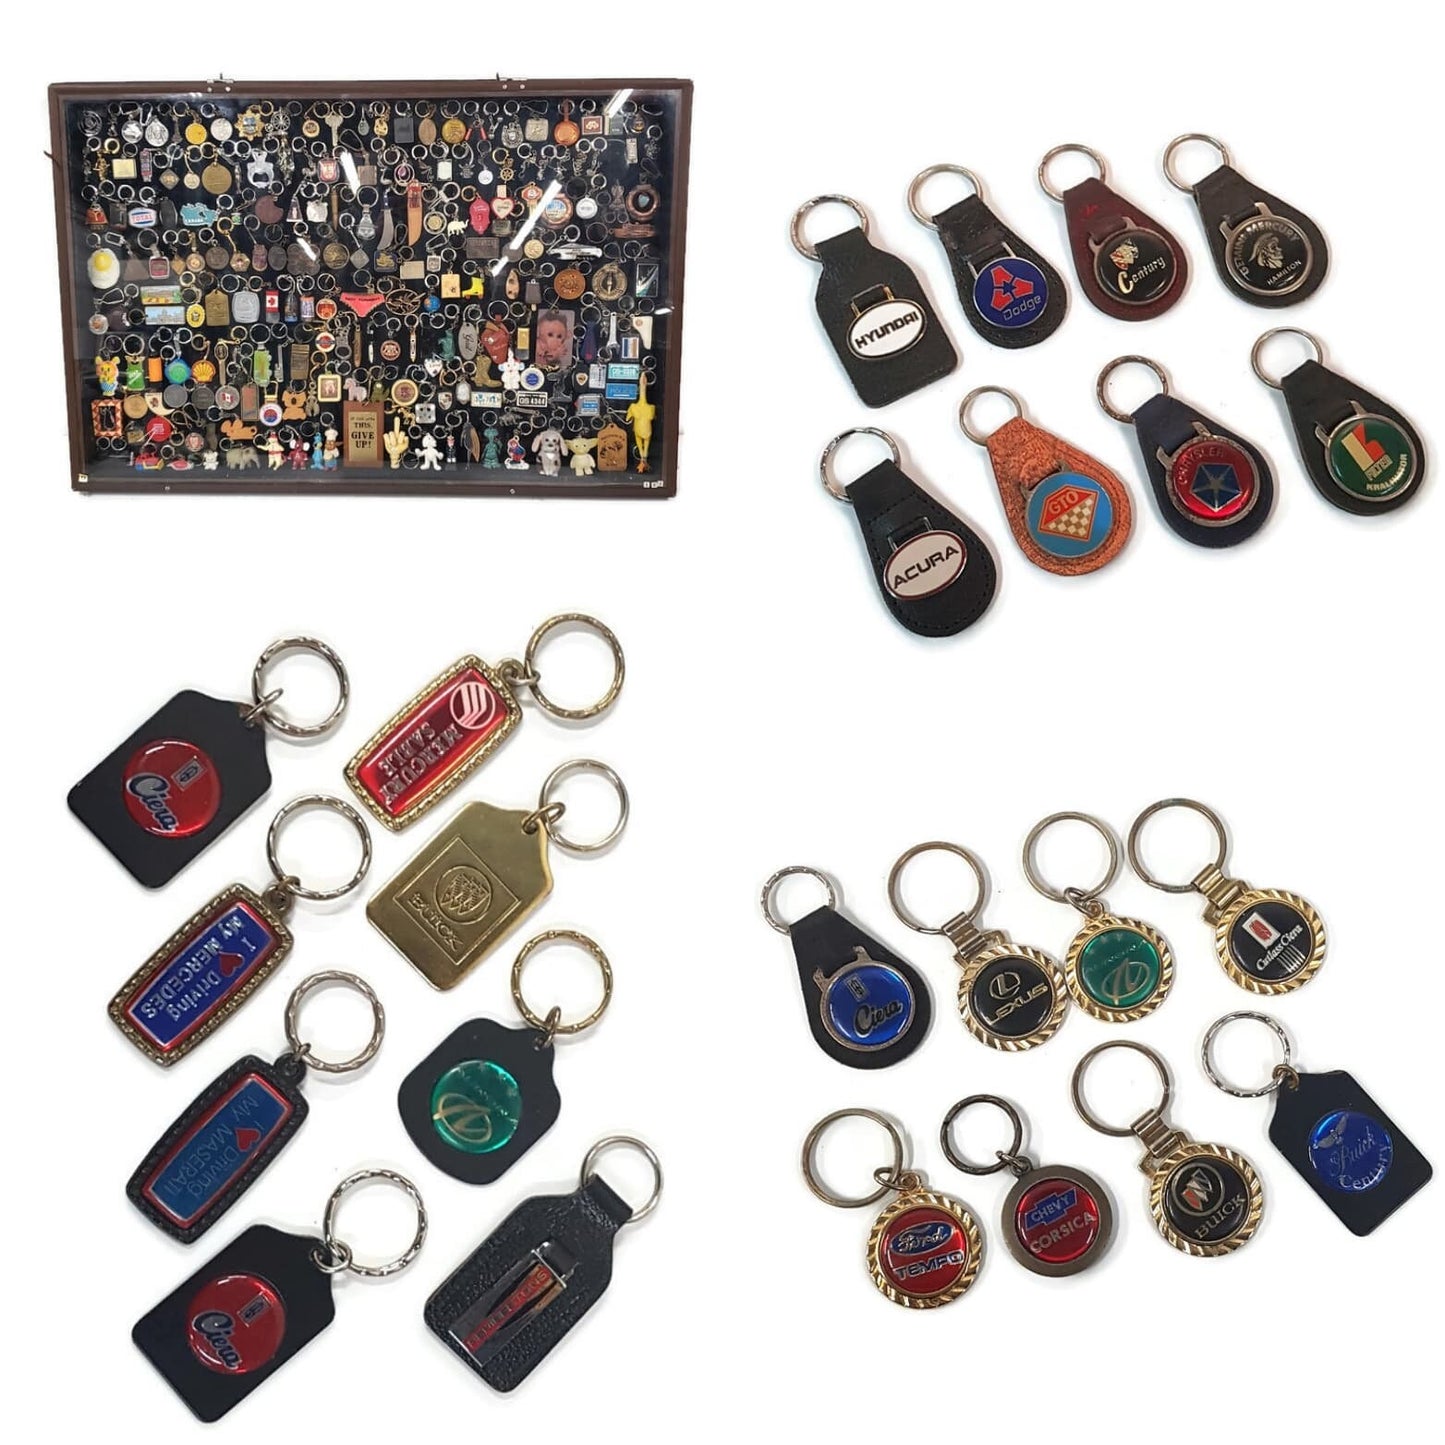 BUICK skyhawk Key Chain Keychain Key Fob Keytag Vintage Automotove Keychain Gift Collectible